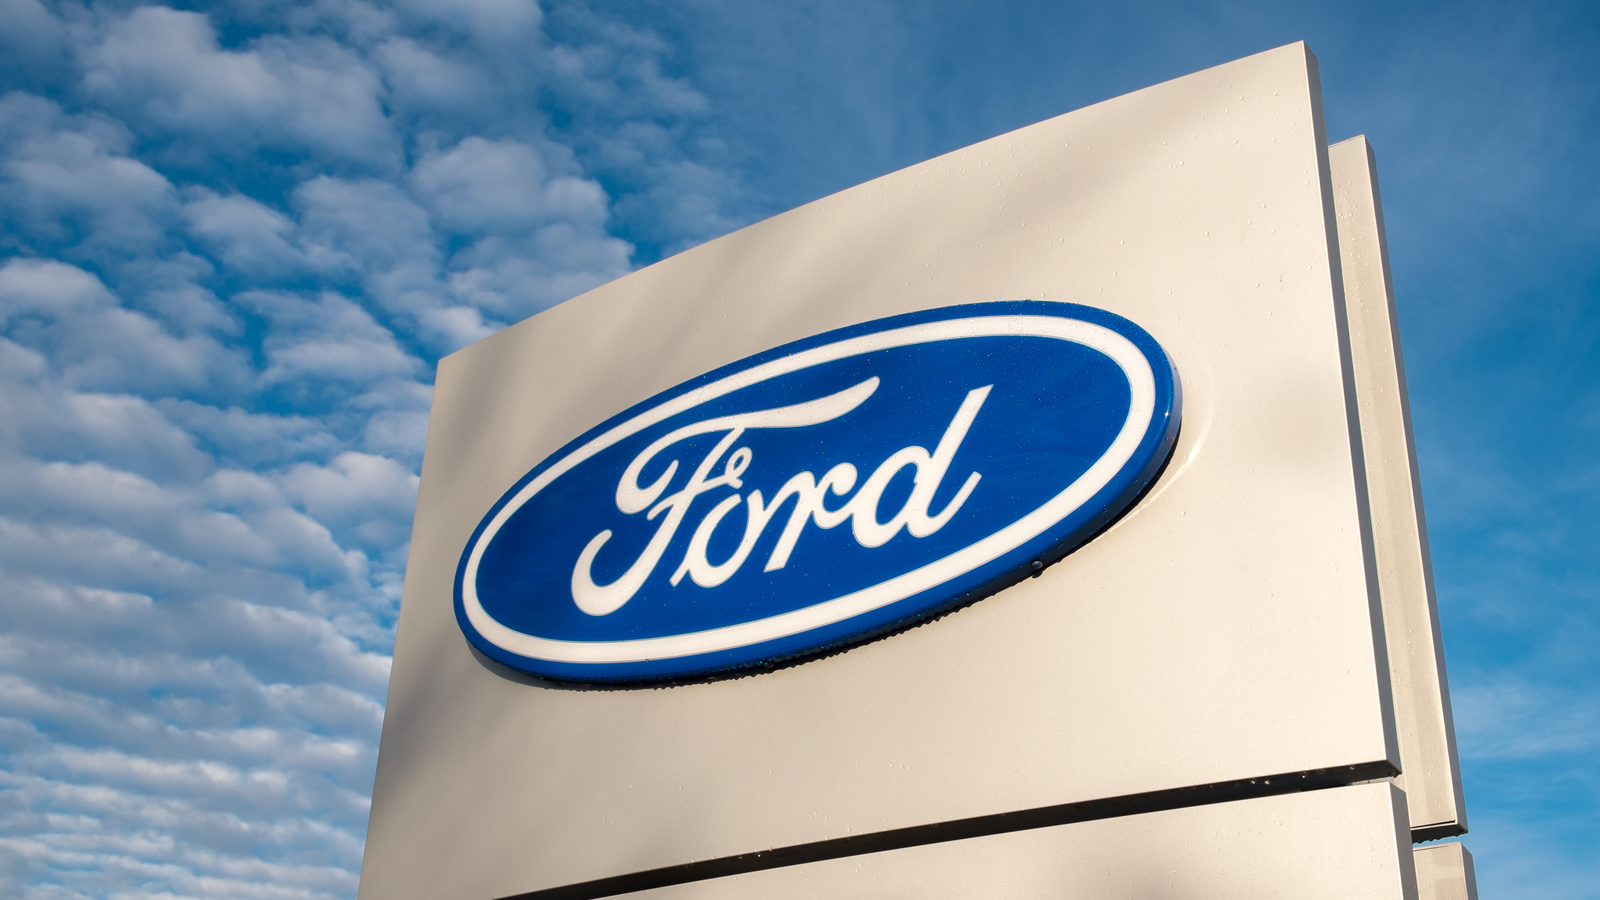 Ford (F) dealership sign against a blue sky.